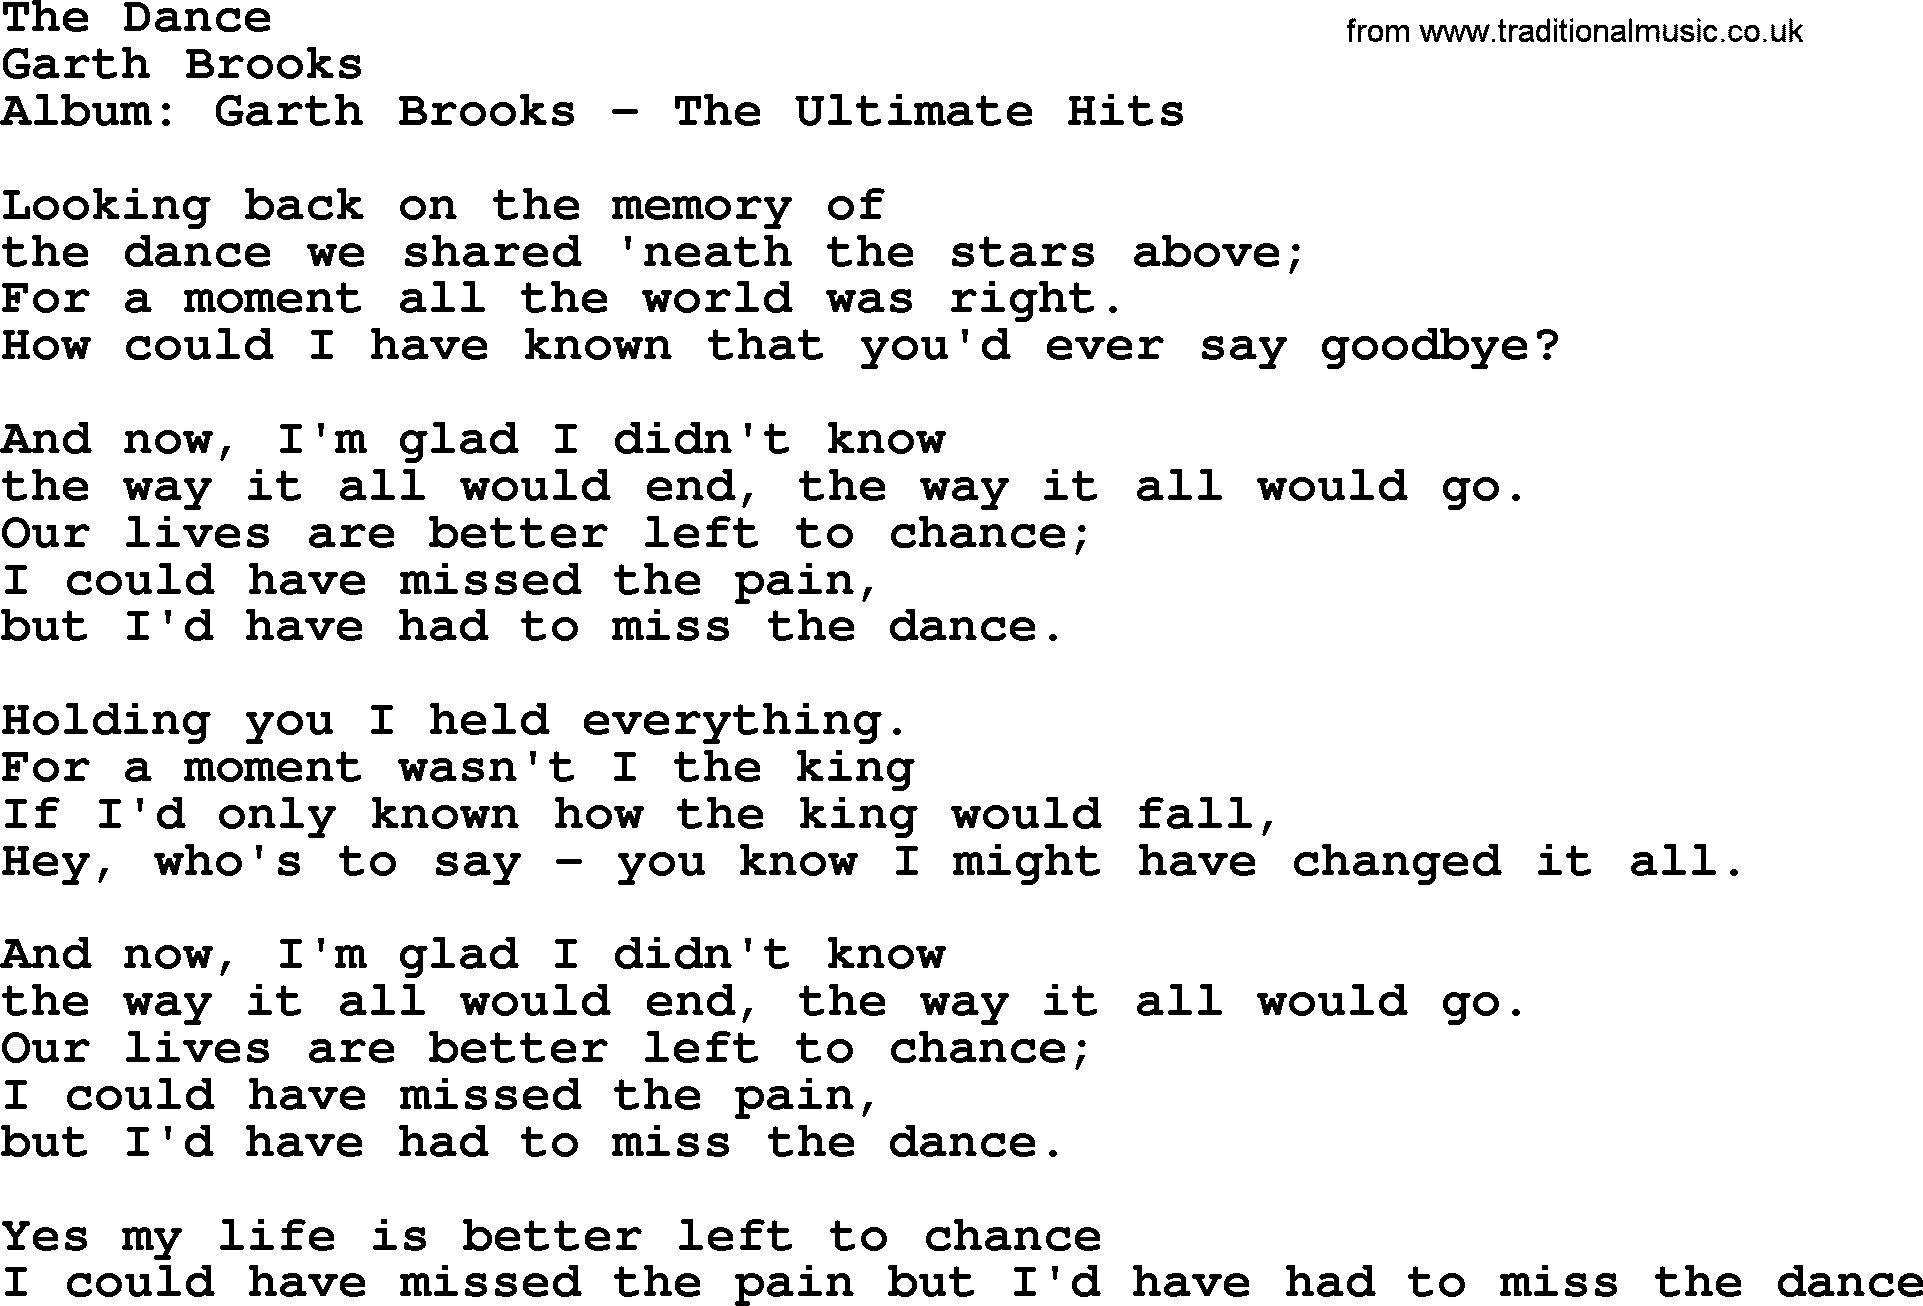 Garth Brooks song: The Dance, lyrics